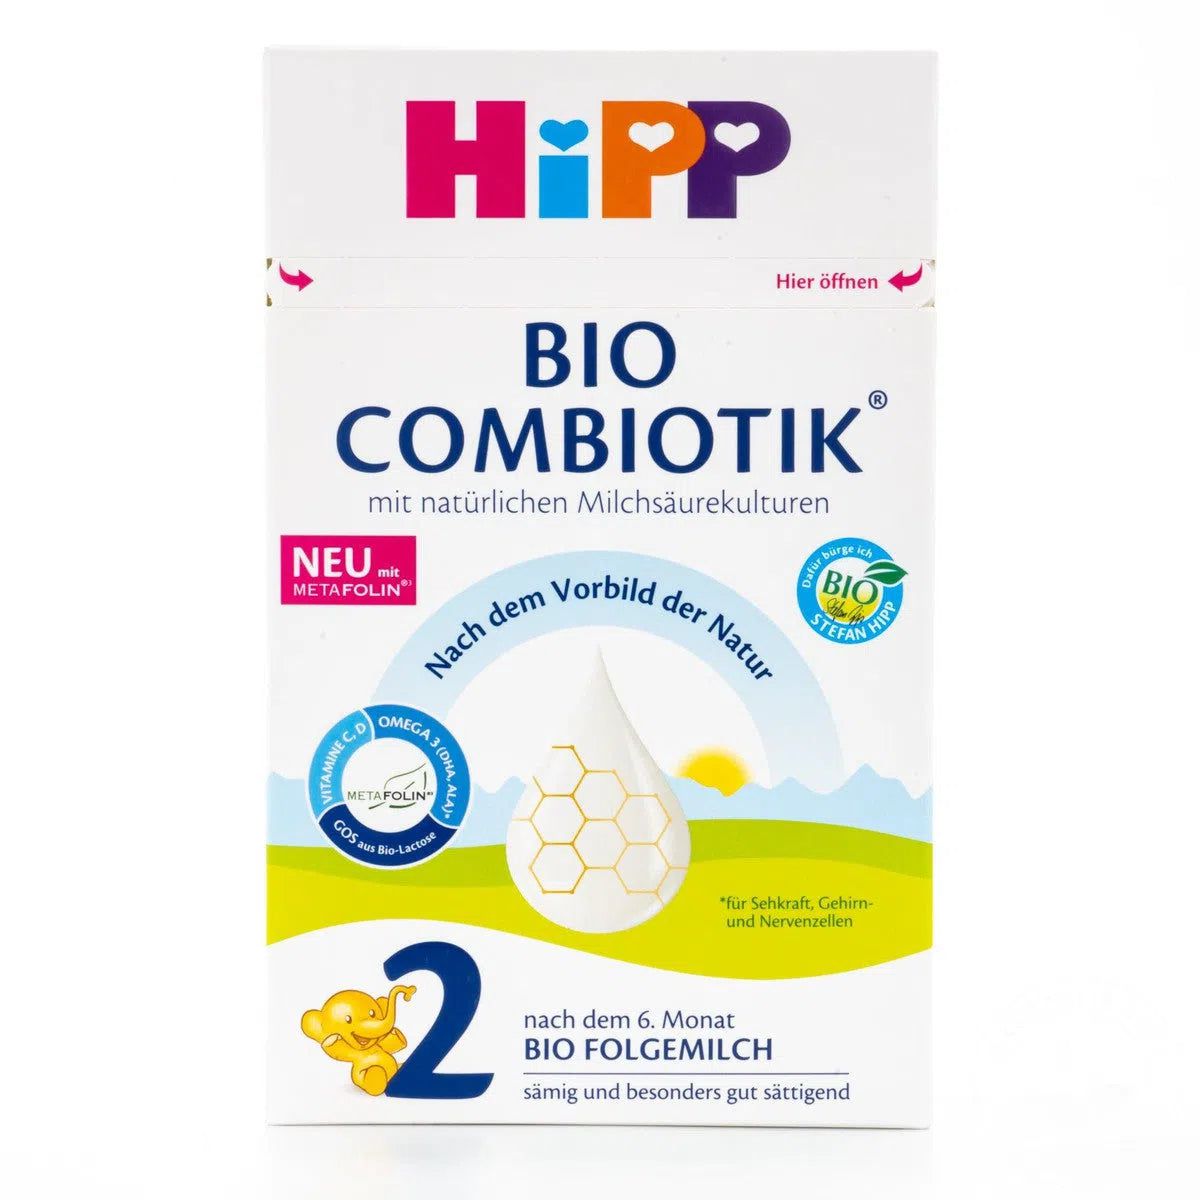 Hipp 2 Organic Combiotic Baby Follow-on Milk 350 G – Turcamart ®